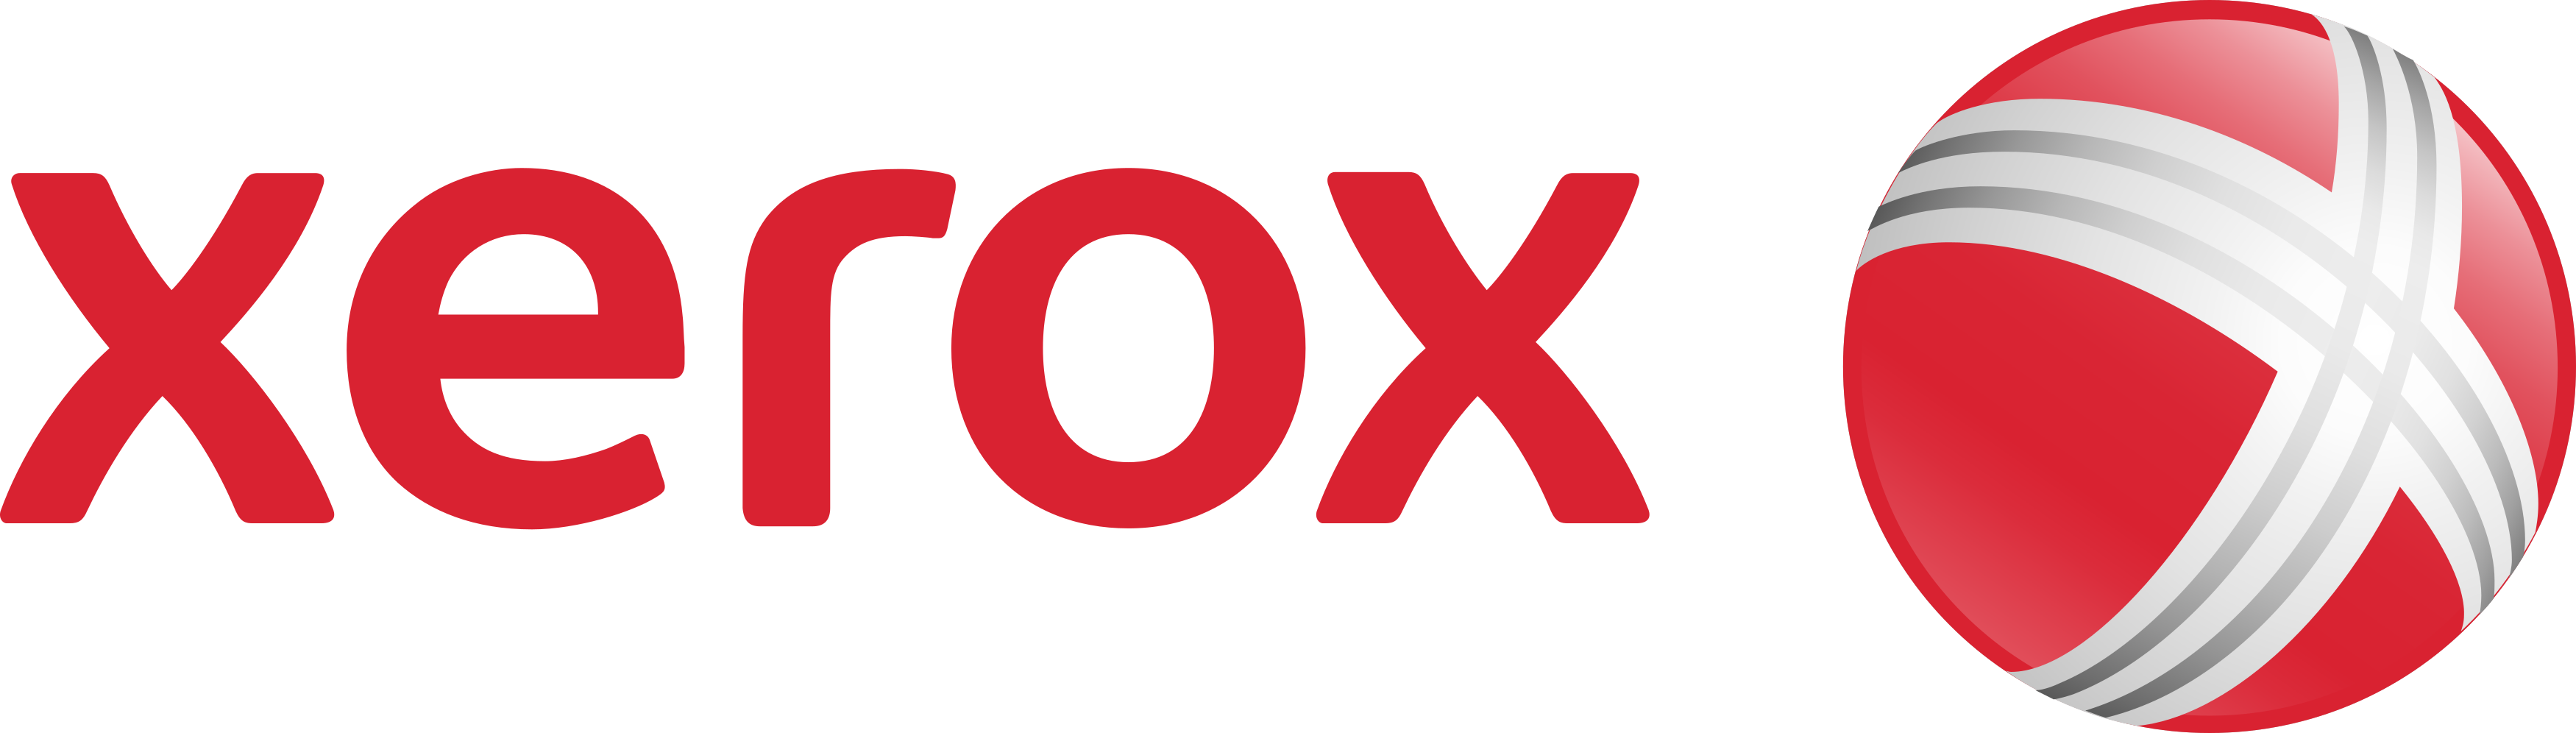 Xerox logo.